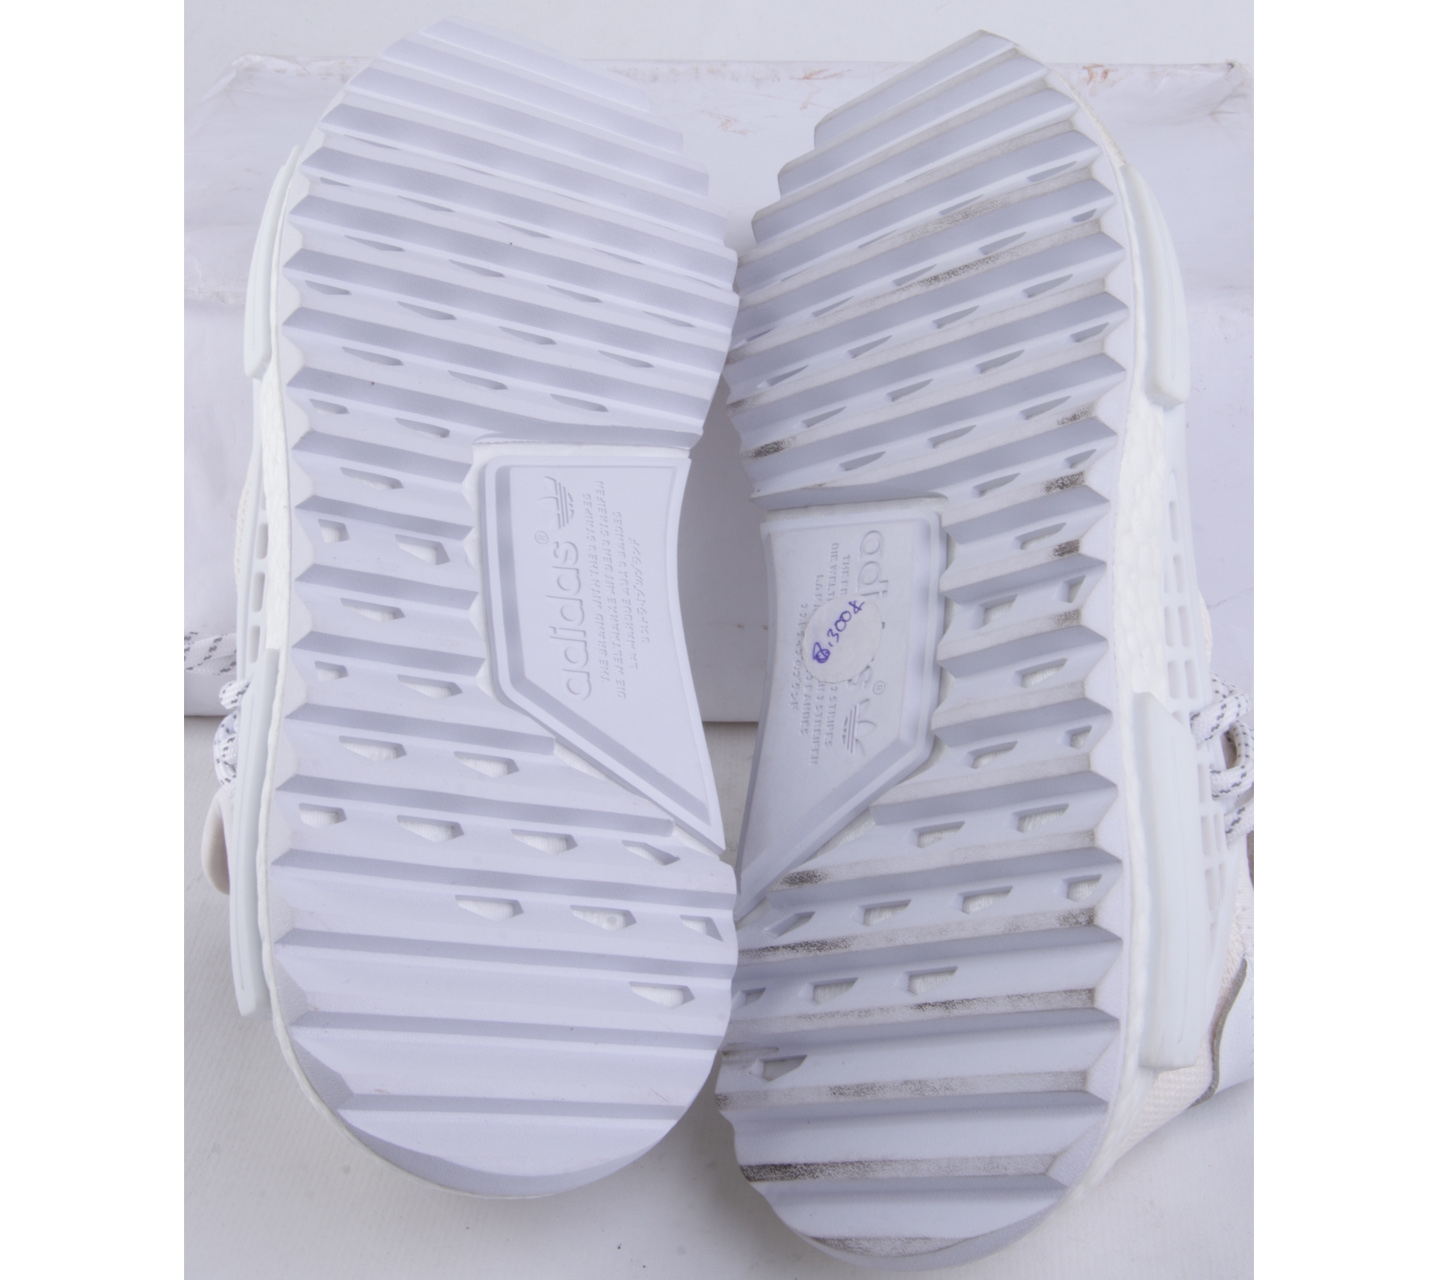 Adidas Human Race NMD Pharell Blank Canvas Sneakers